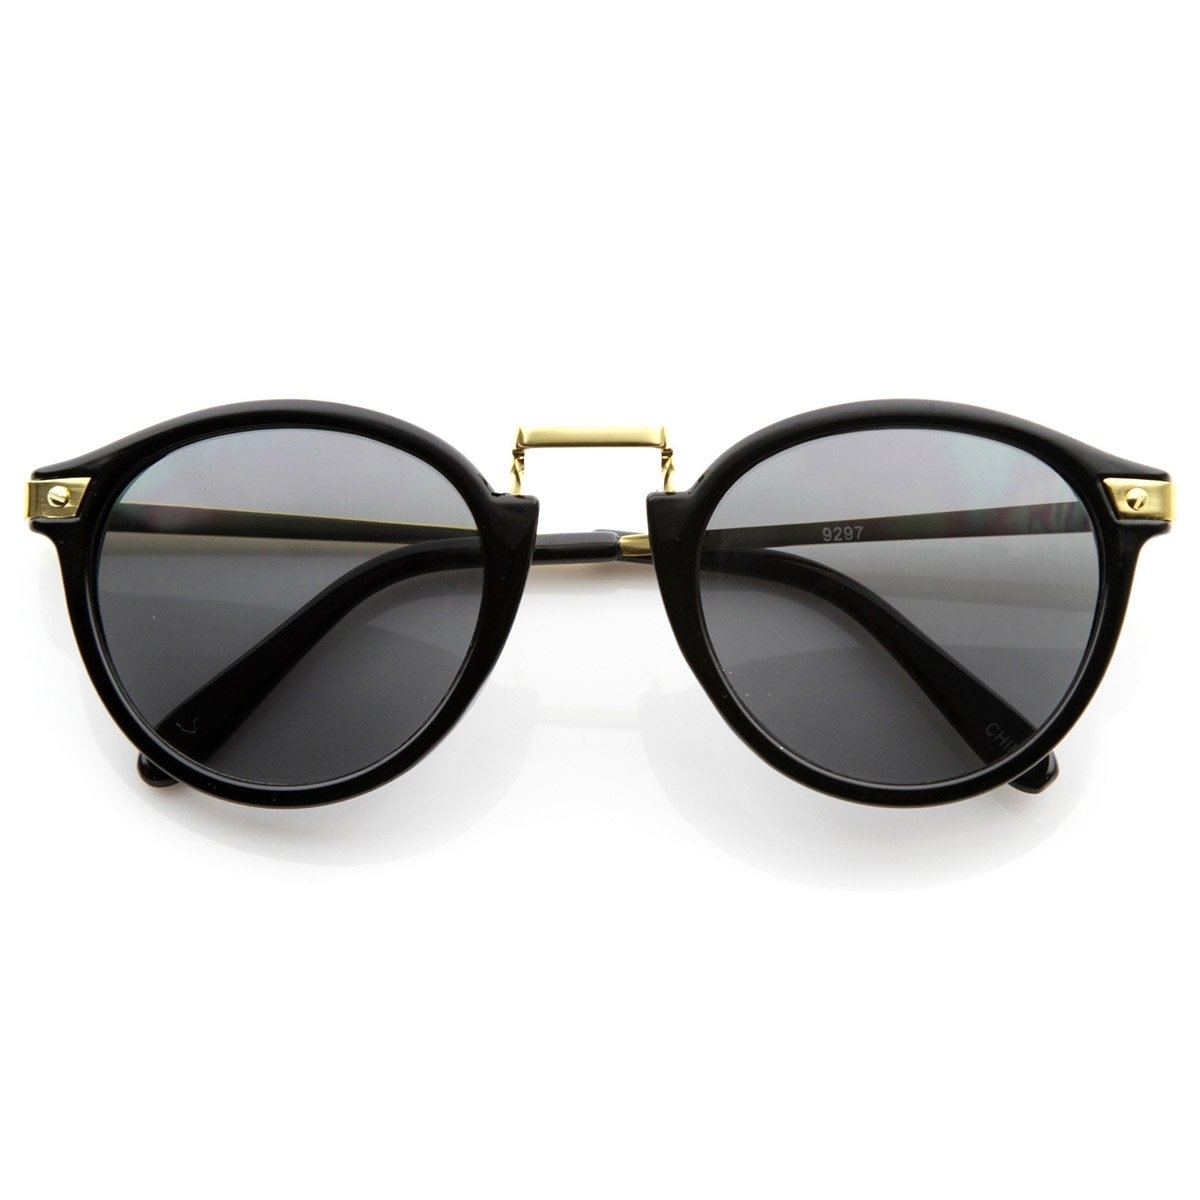 Vintage Inspired Round Horned Rim P-3 Frame Retro Sunglasses - Creme Amber